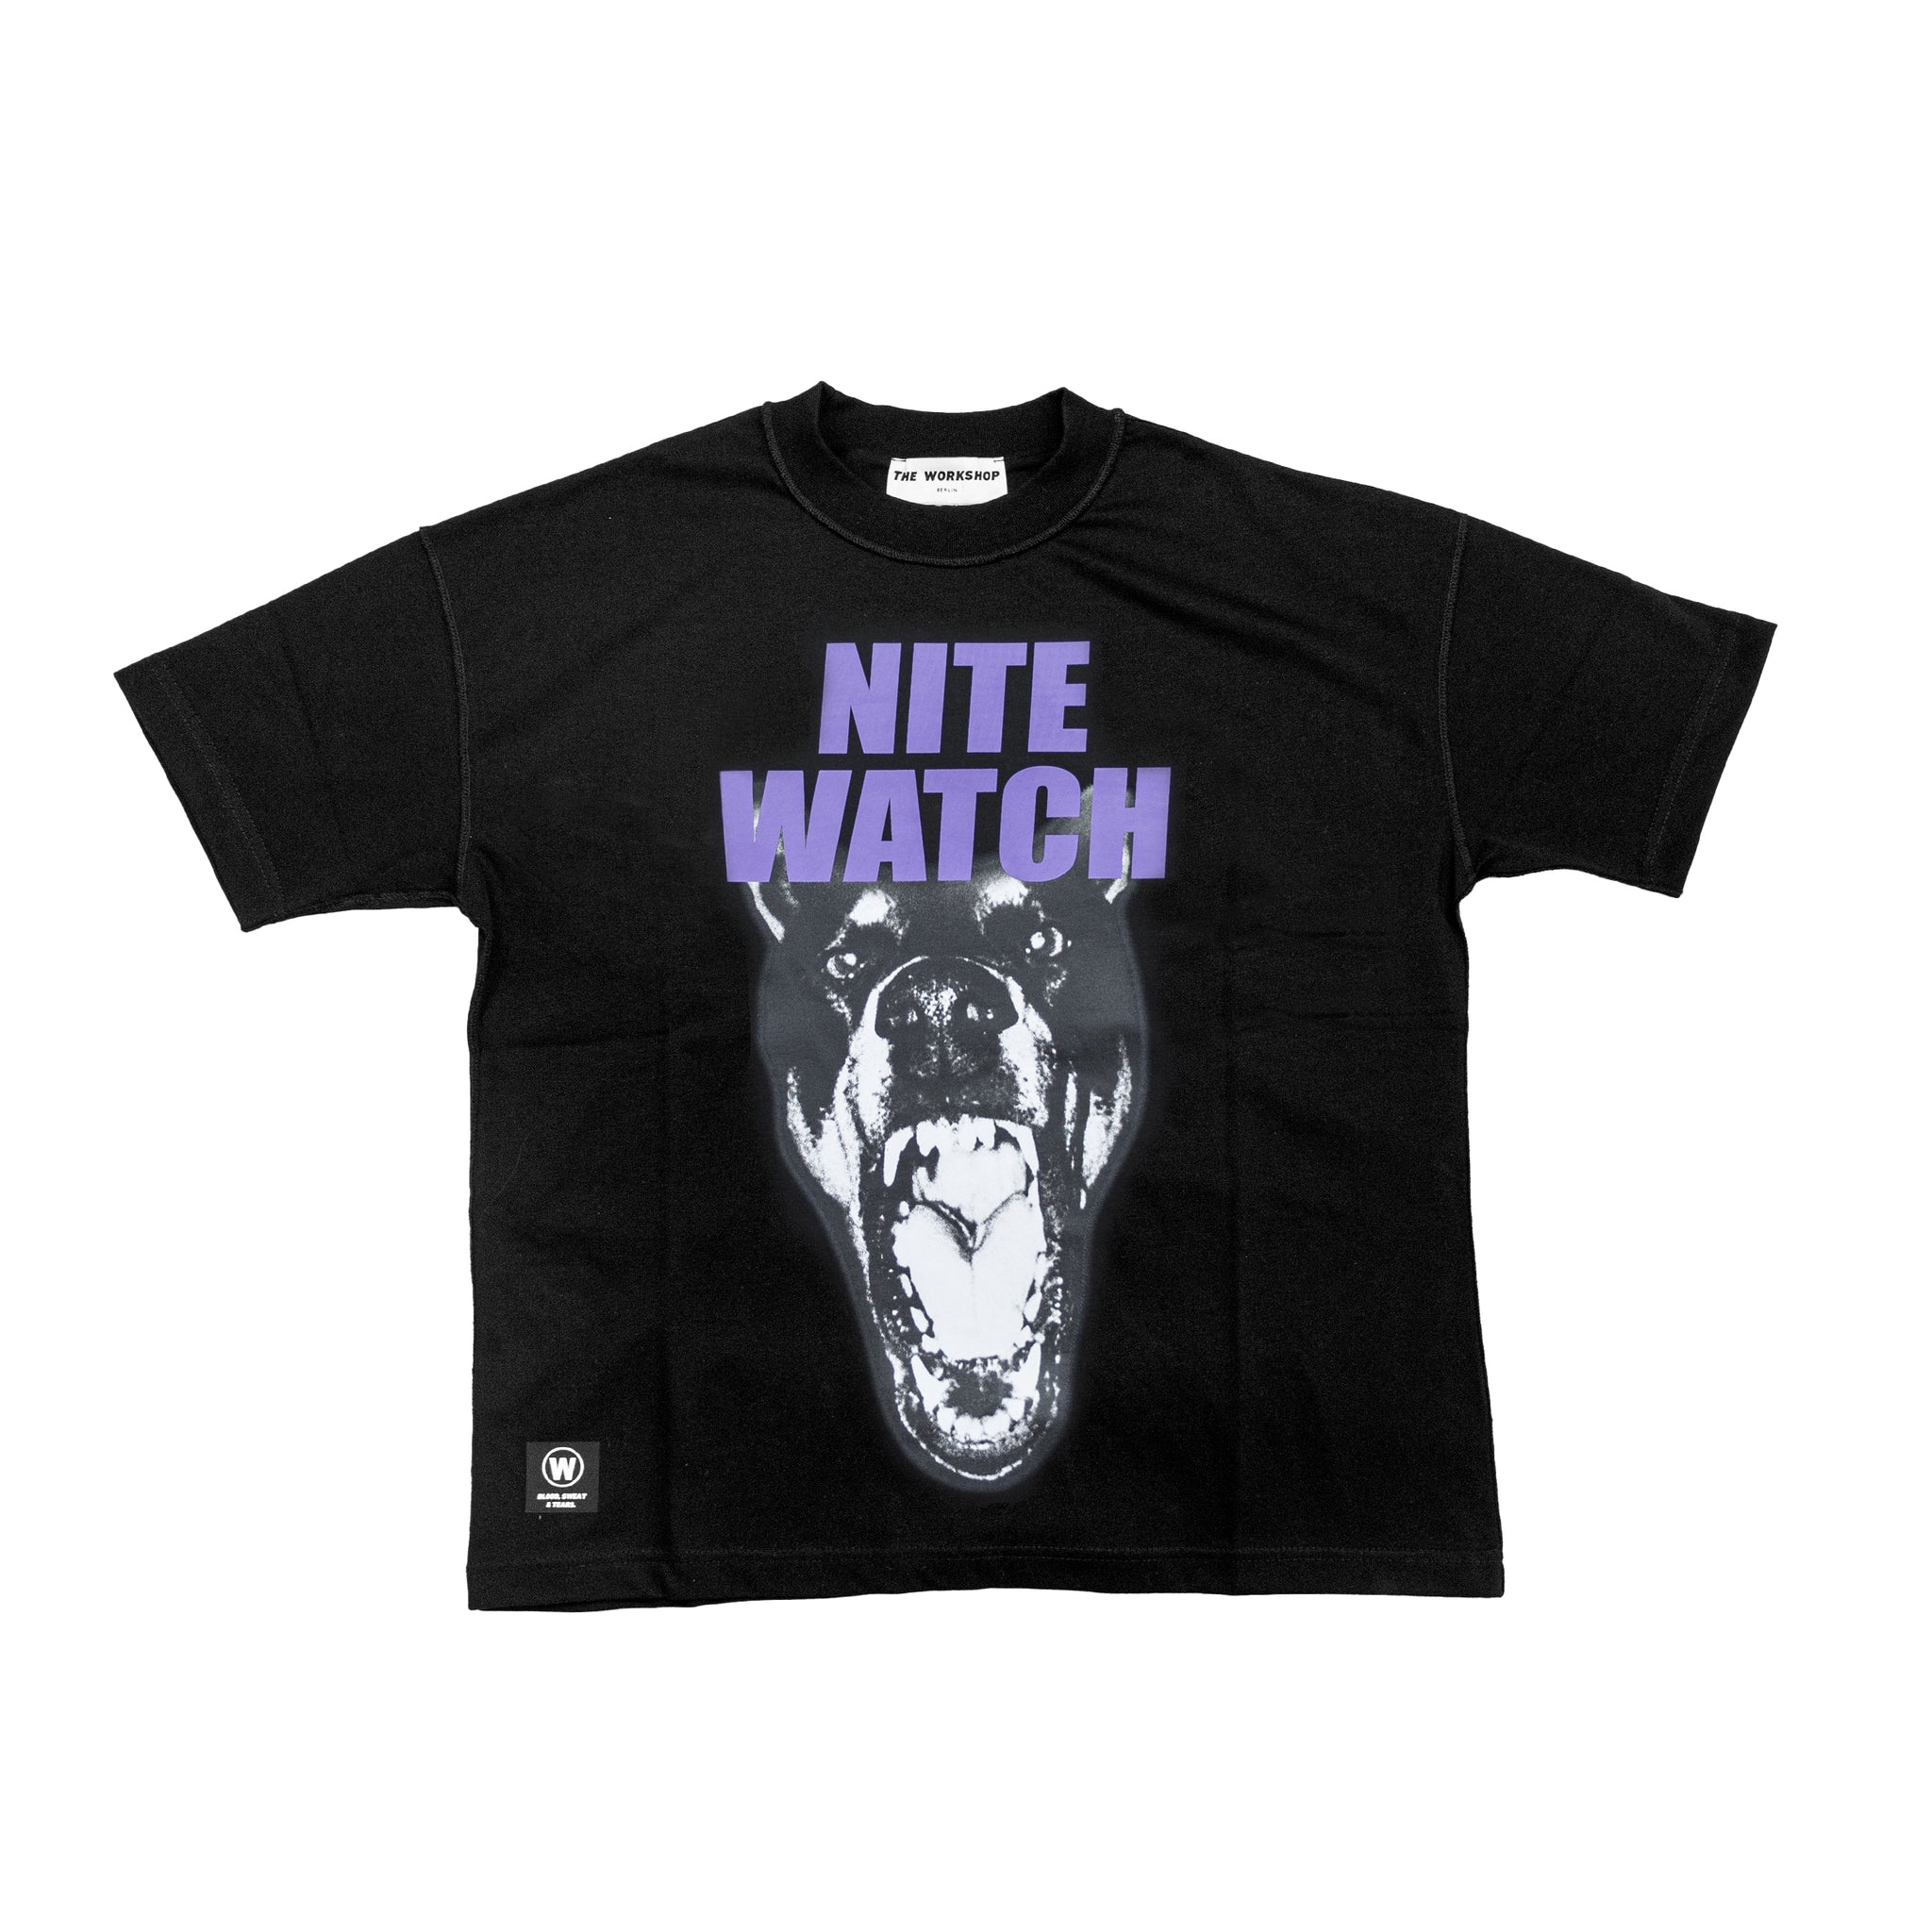 // The Nite Watch T-Shirt